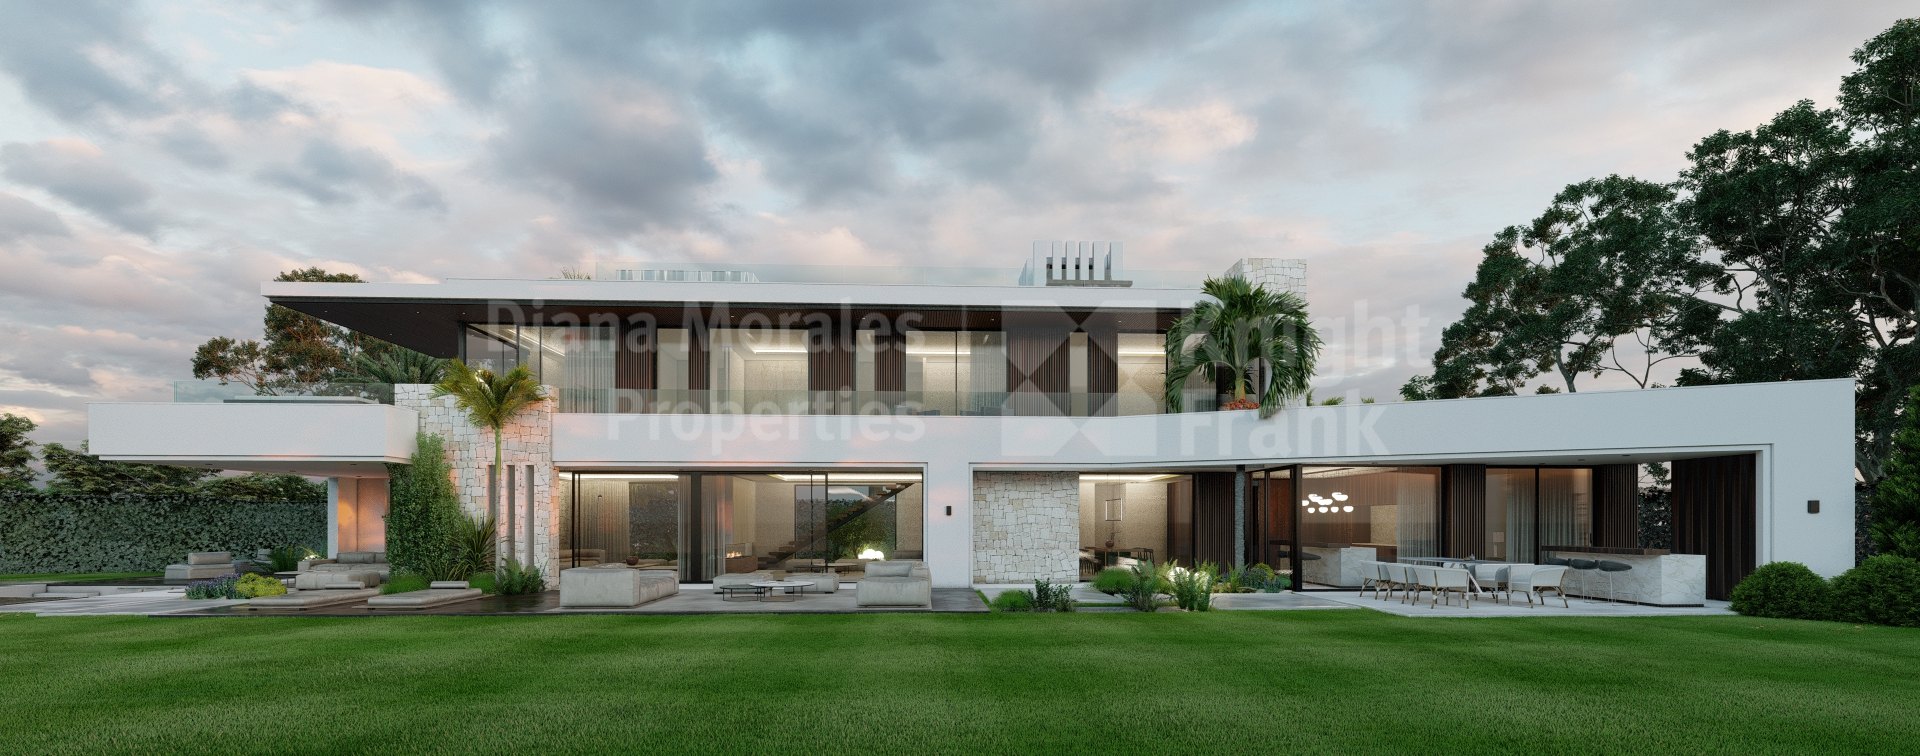 El Saladillo, Turn key project for beachside villa in Playa del Sol, New Golden Mile